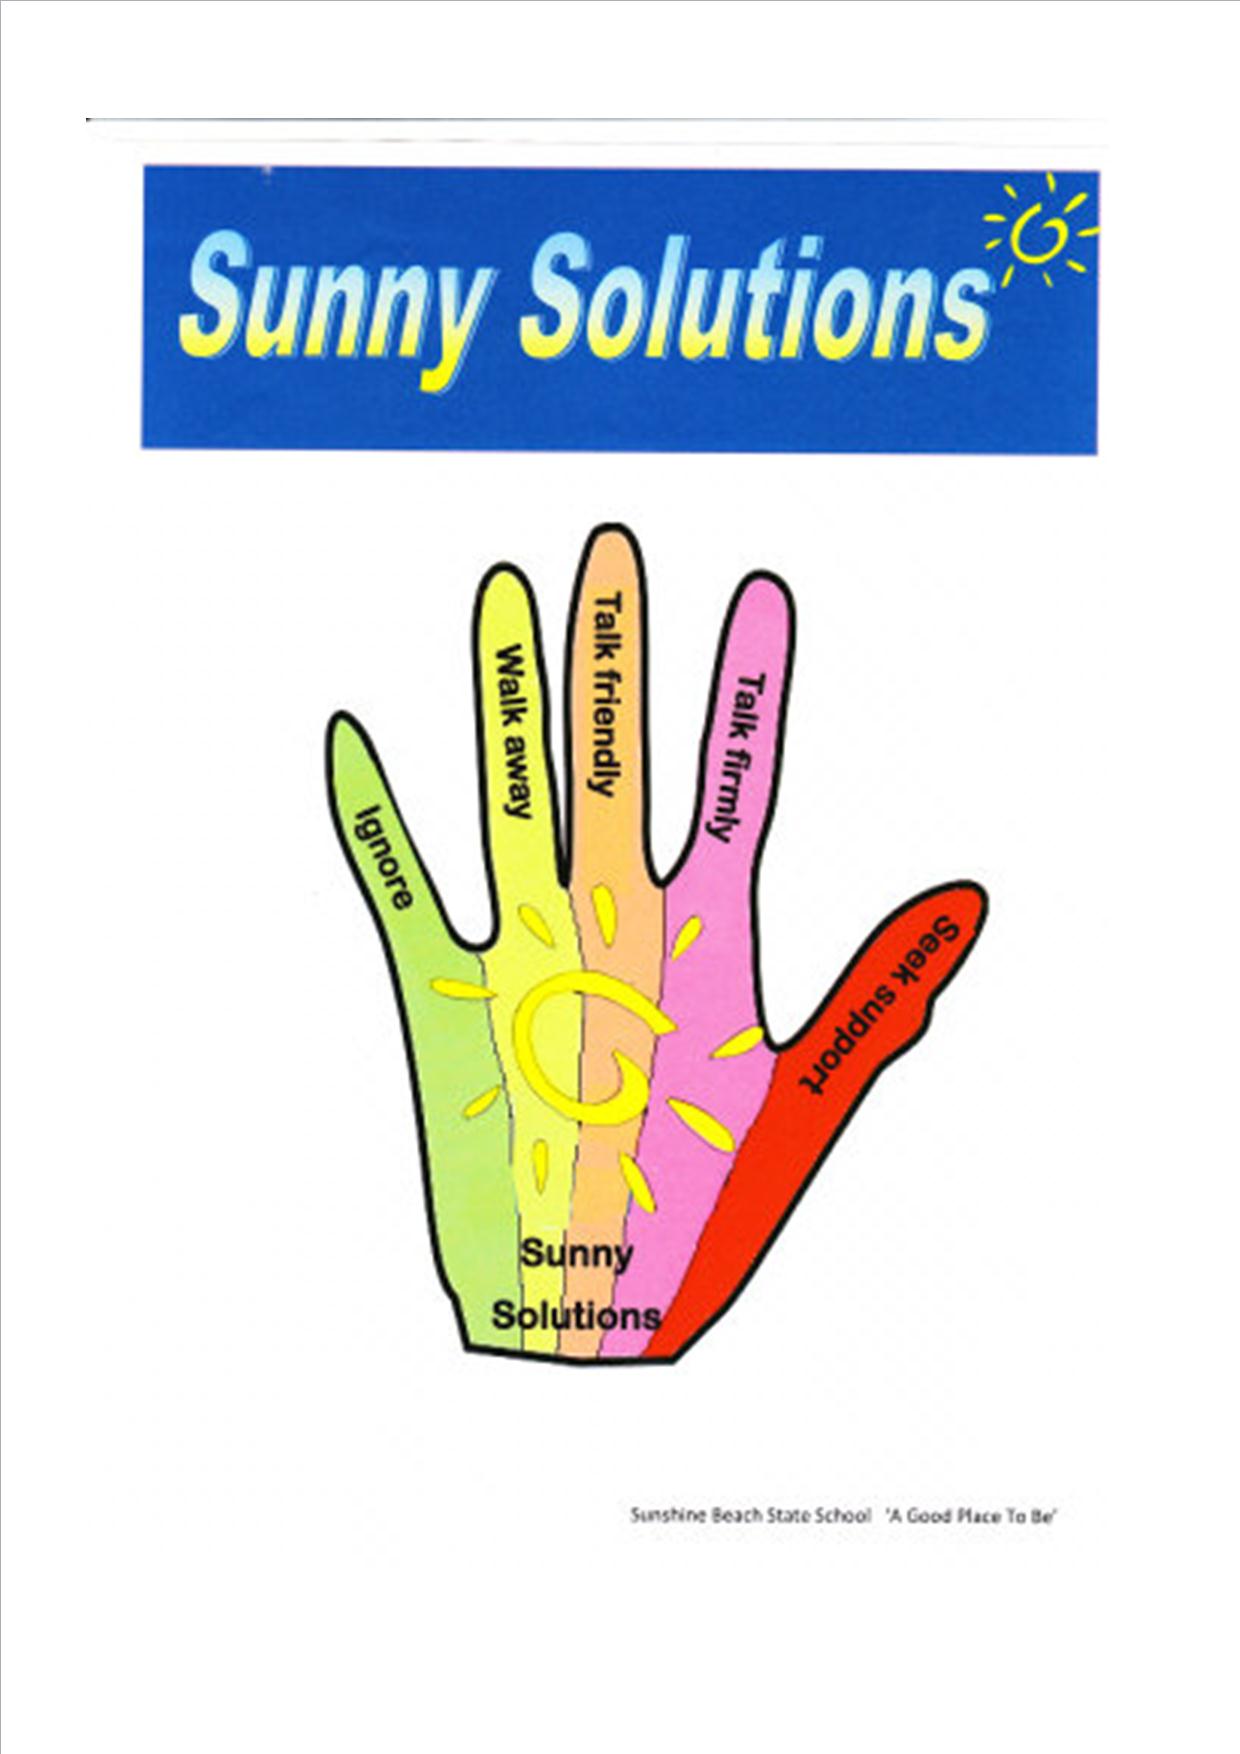 Sunshine Solutions hand